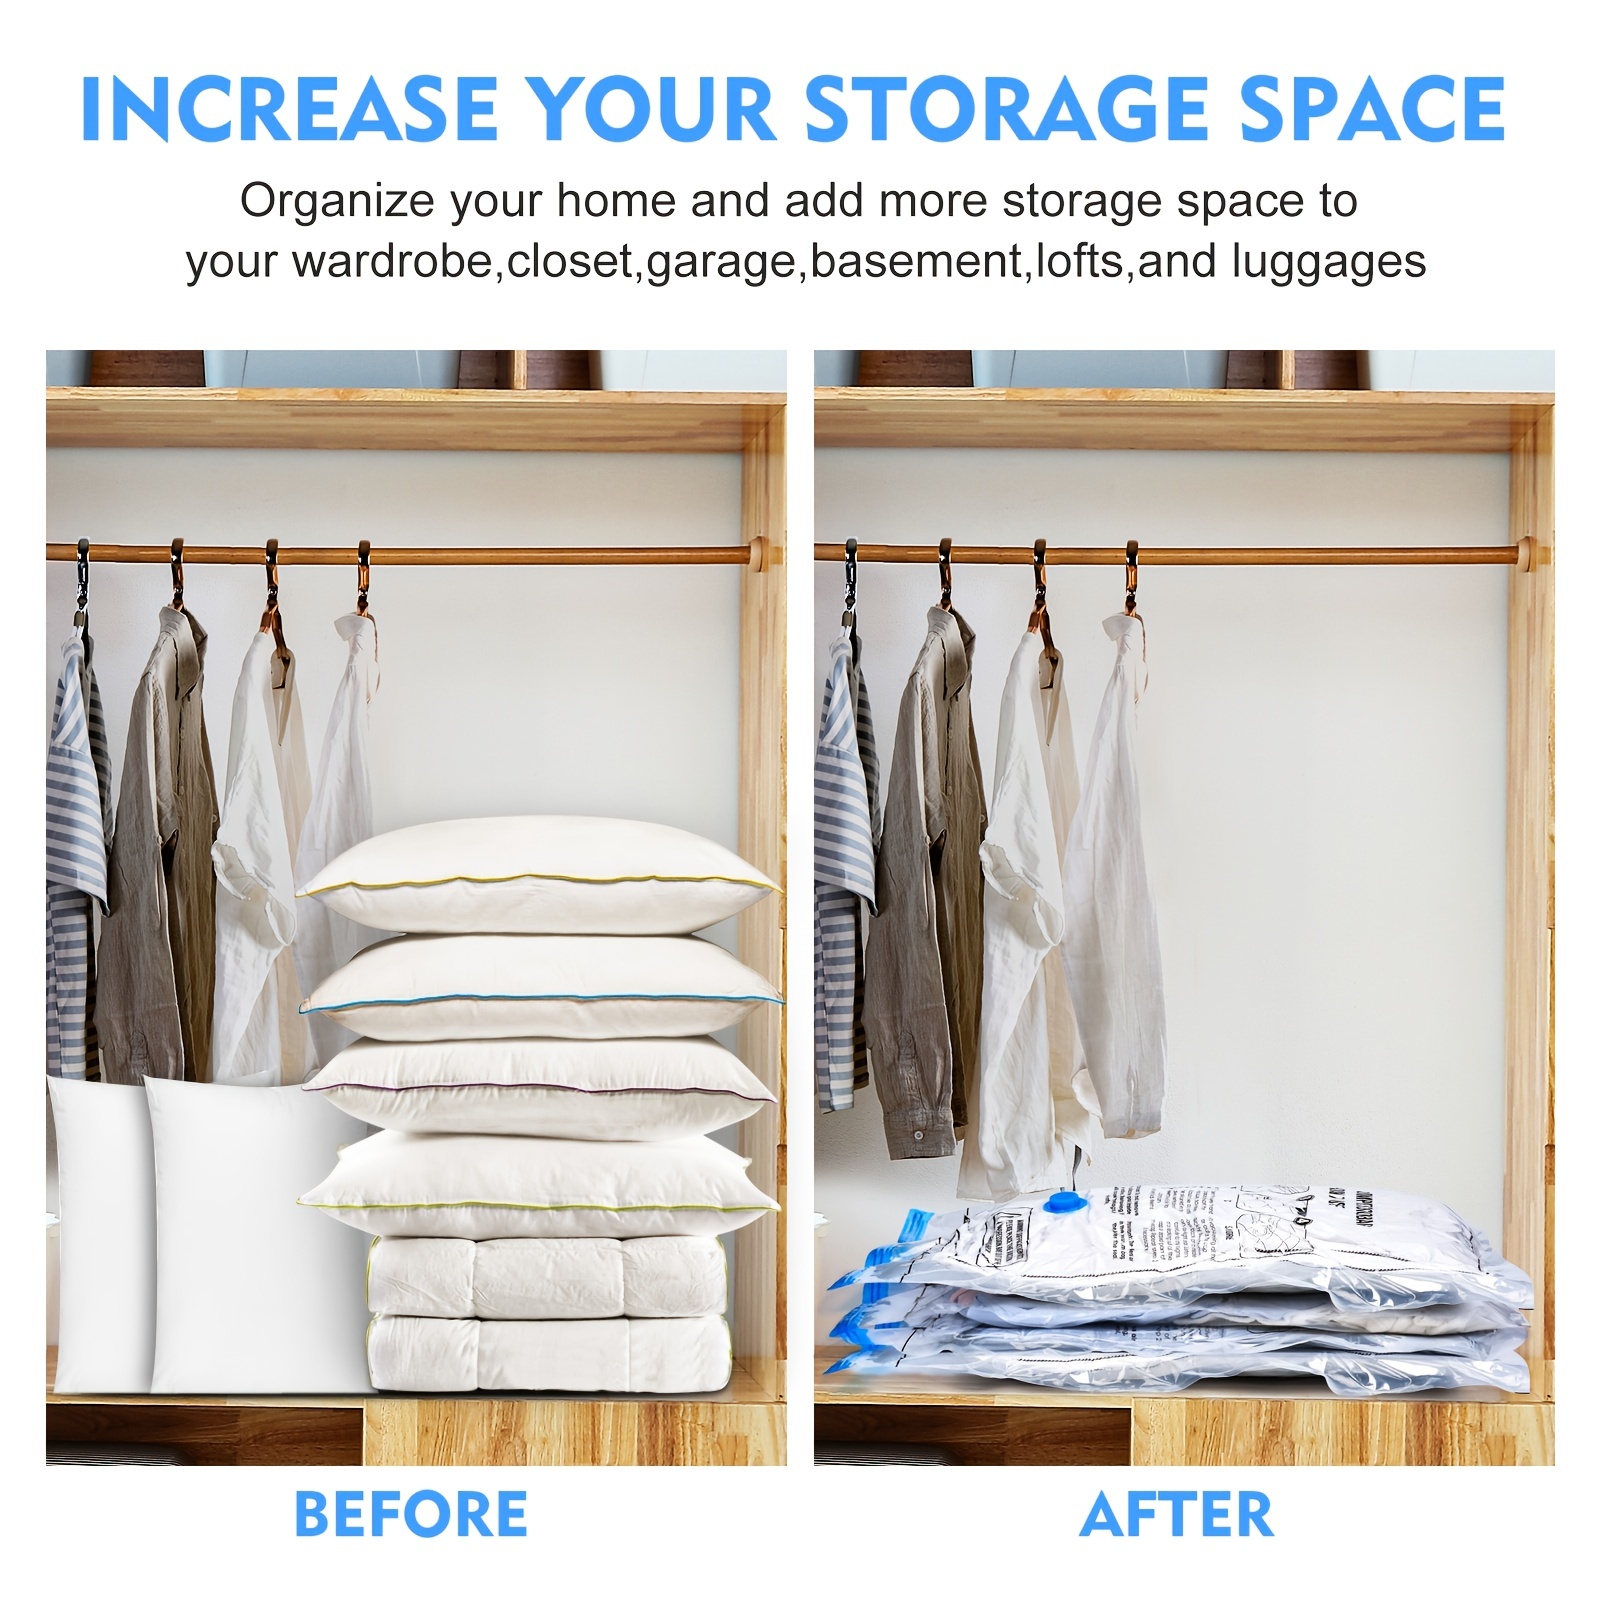 Vacuum Storage Bags + Hand Pump - Maximize Your Storage Space